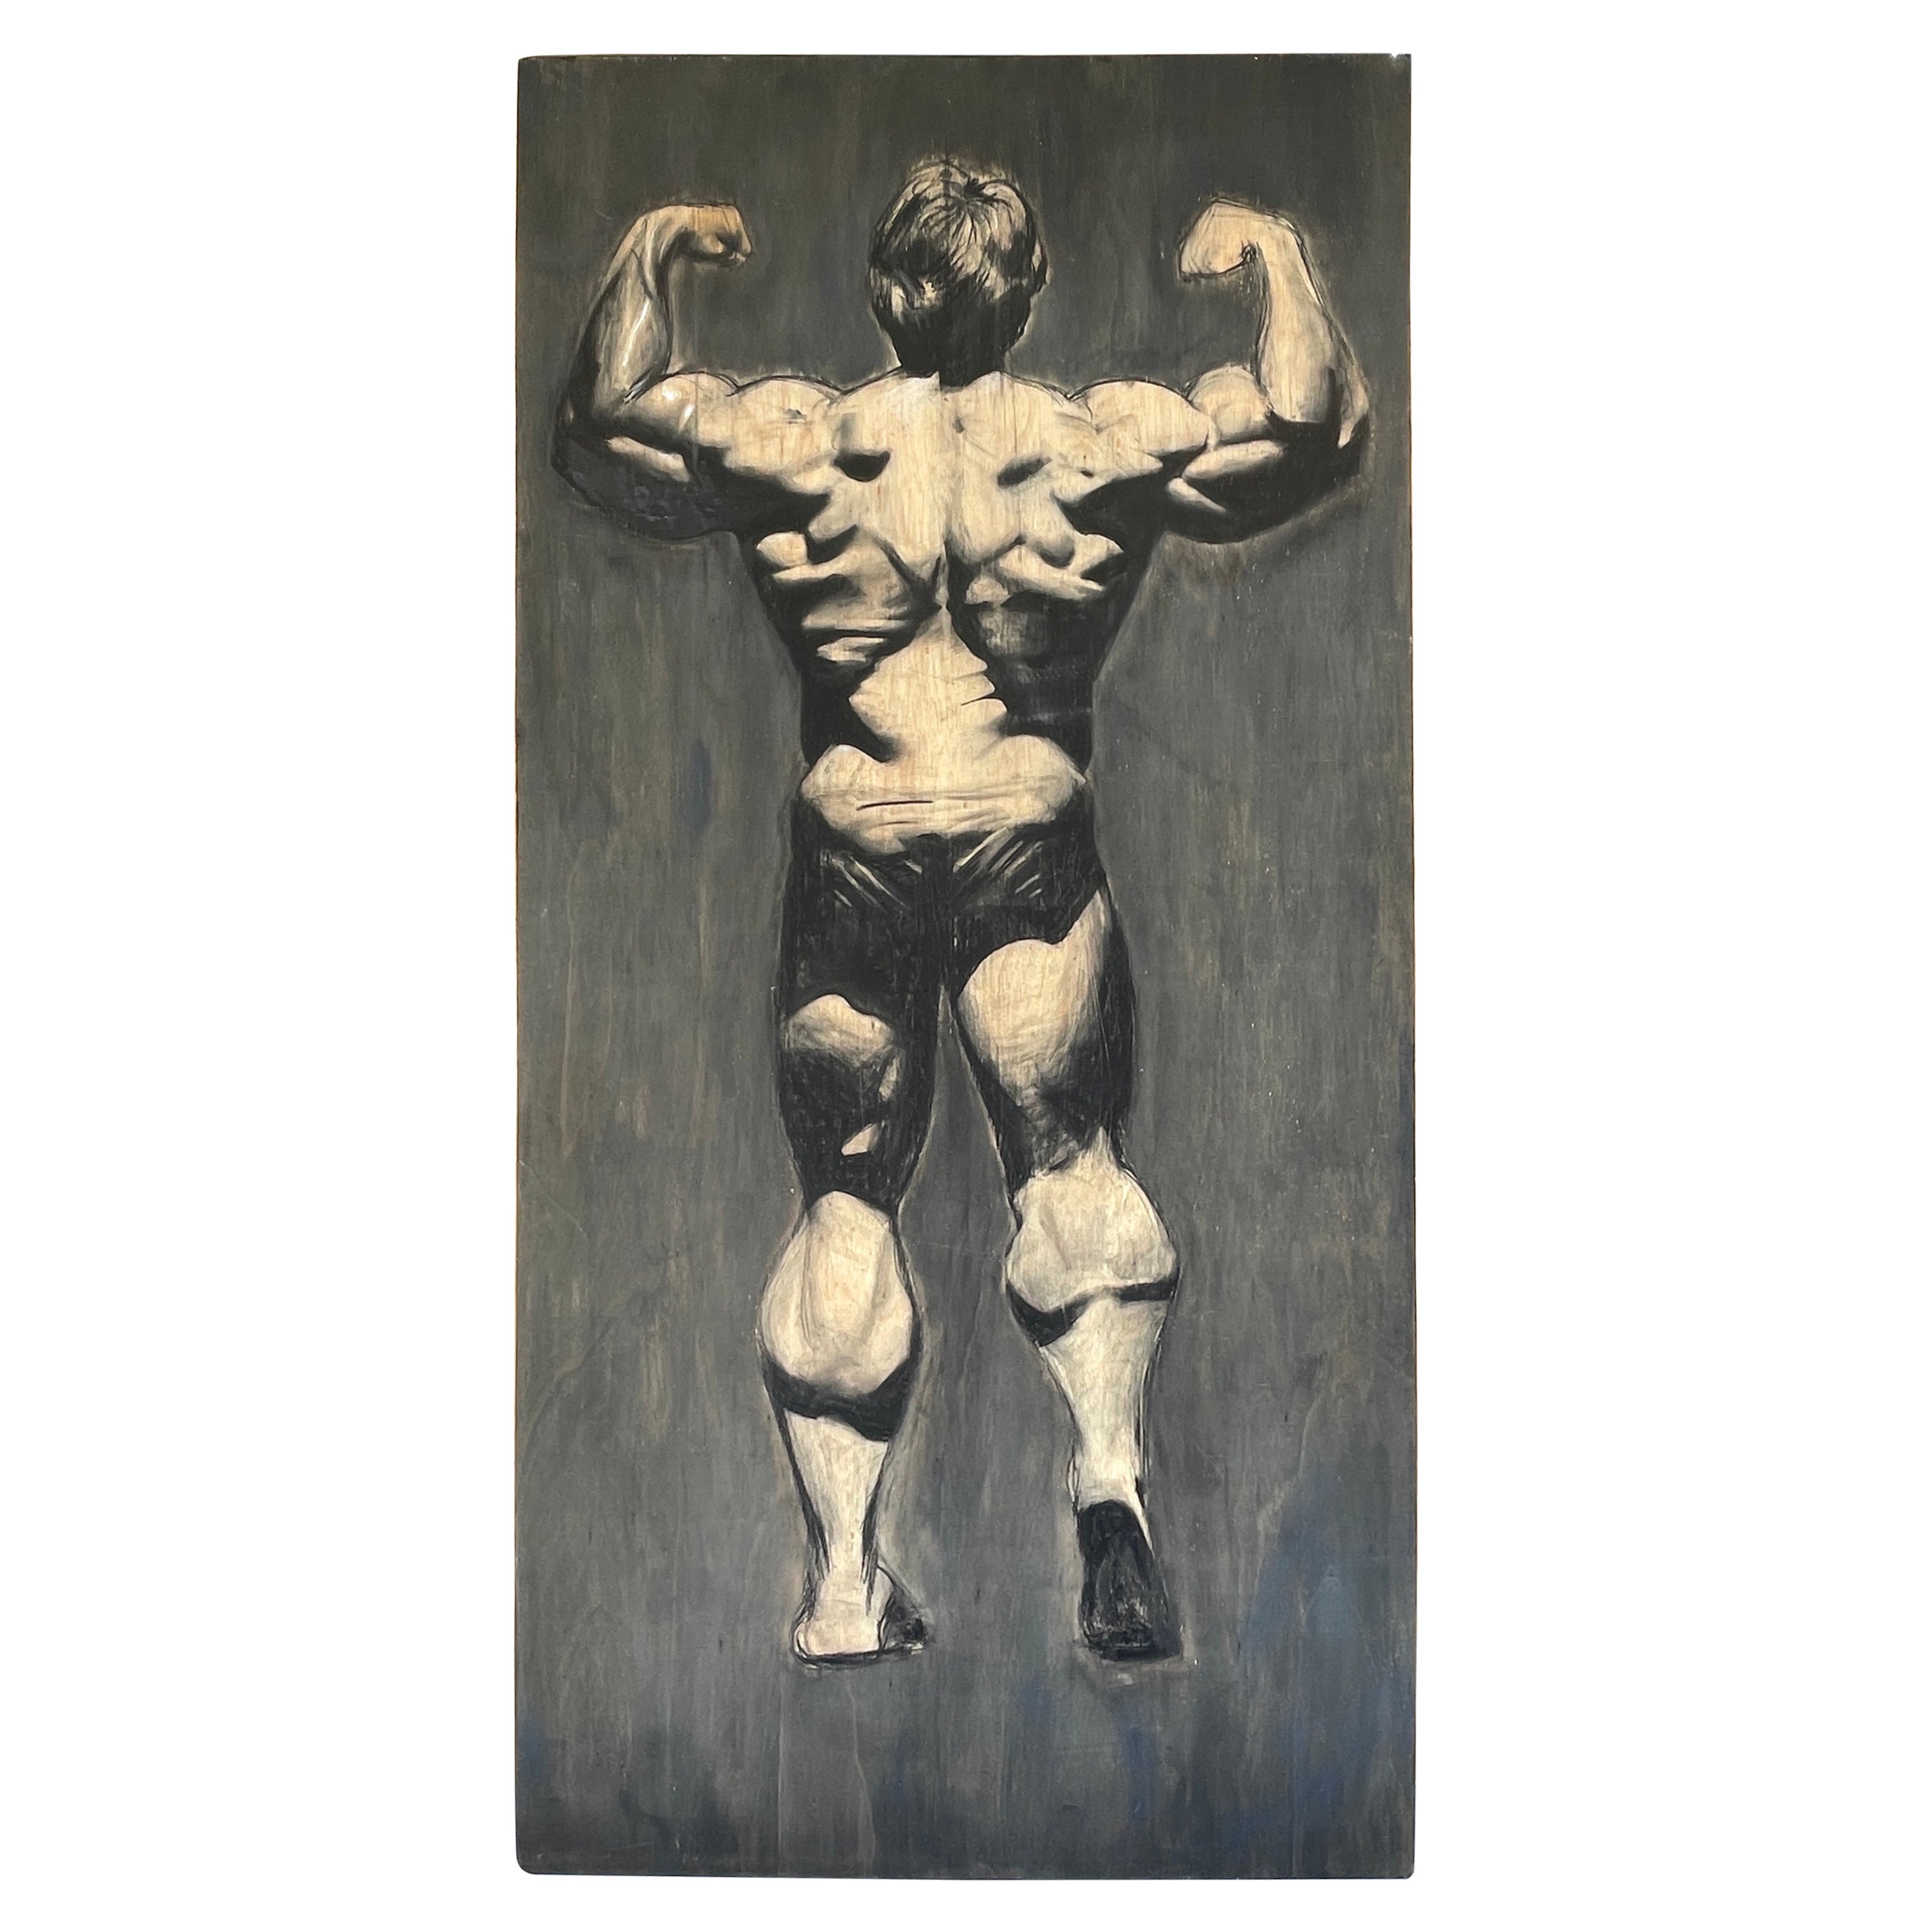 Massive Black & White Painting of Arnold Schwarzenegger's 'Back Double Biceps' For Sale